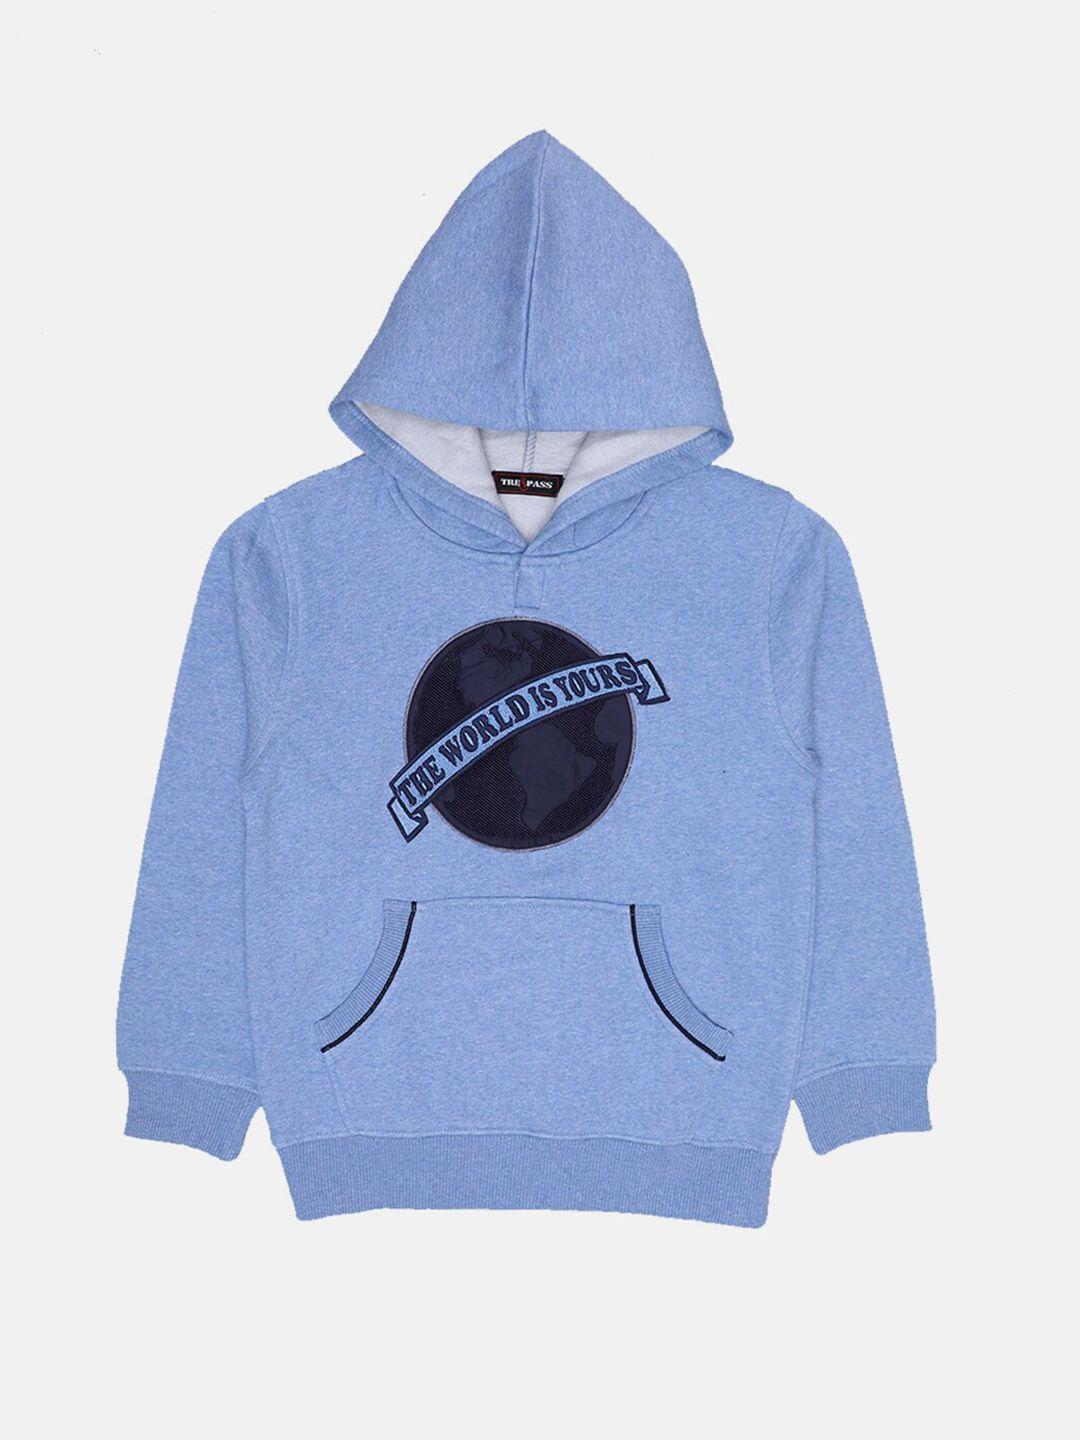 tre&pass boys blue printed hooded sweatshirt